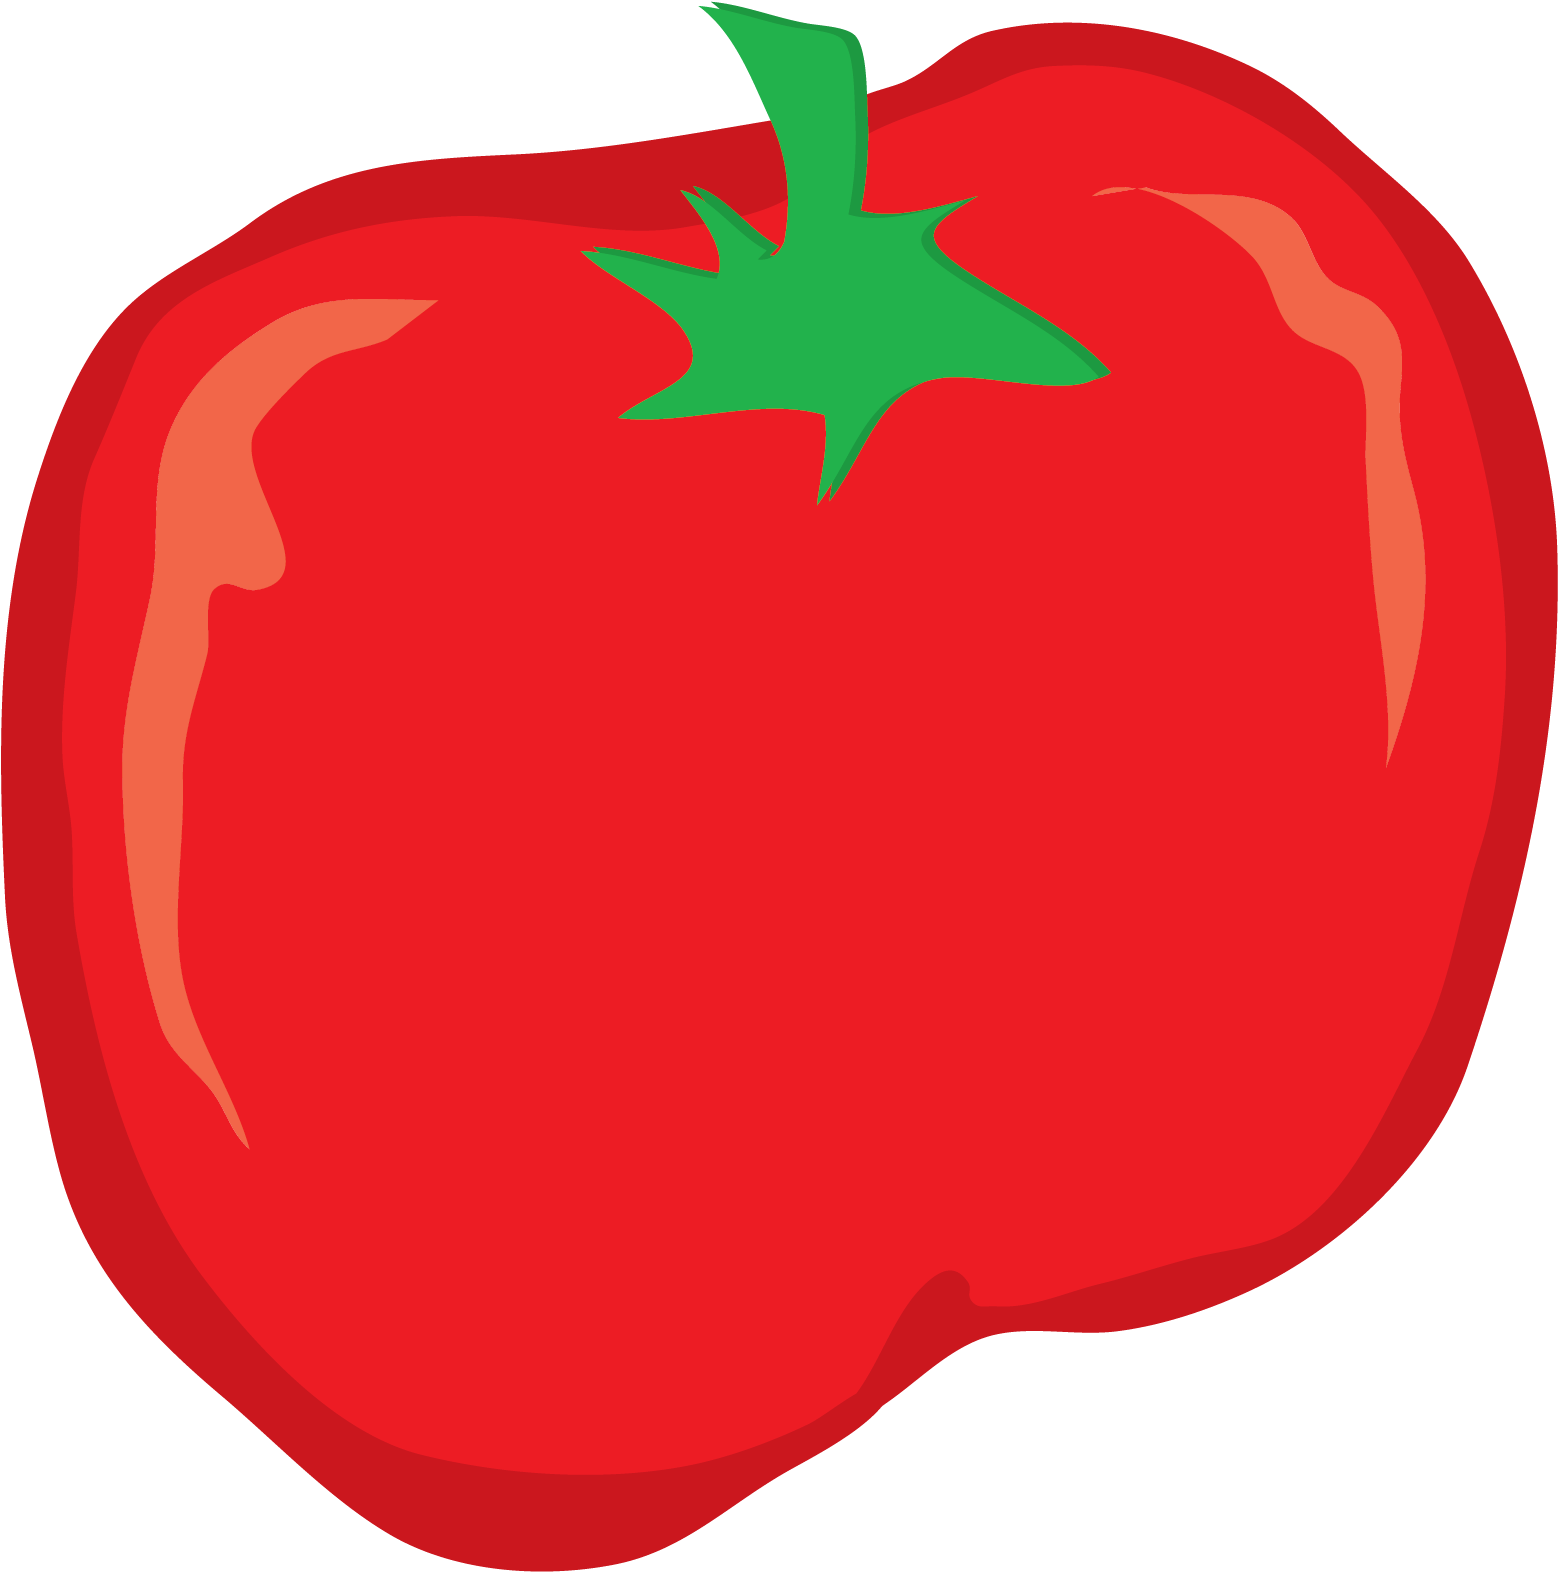 Bell Pepper Clip Art - Cherry Tomatoes (1980x2029)